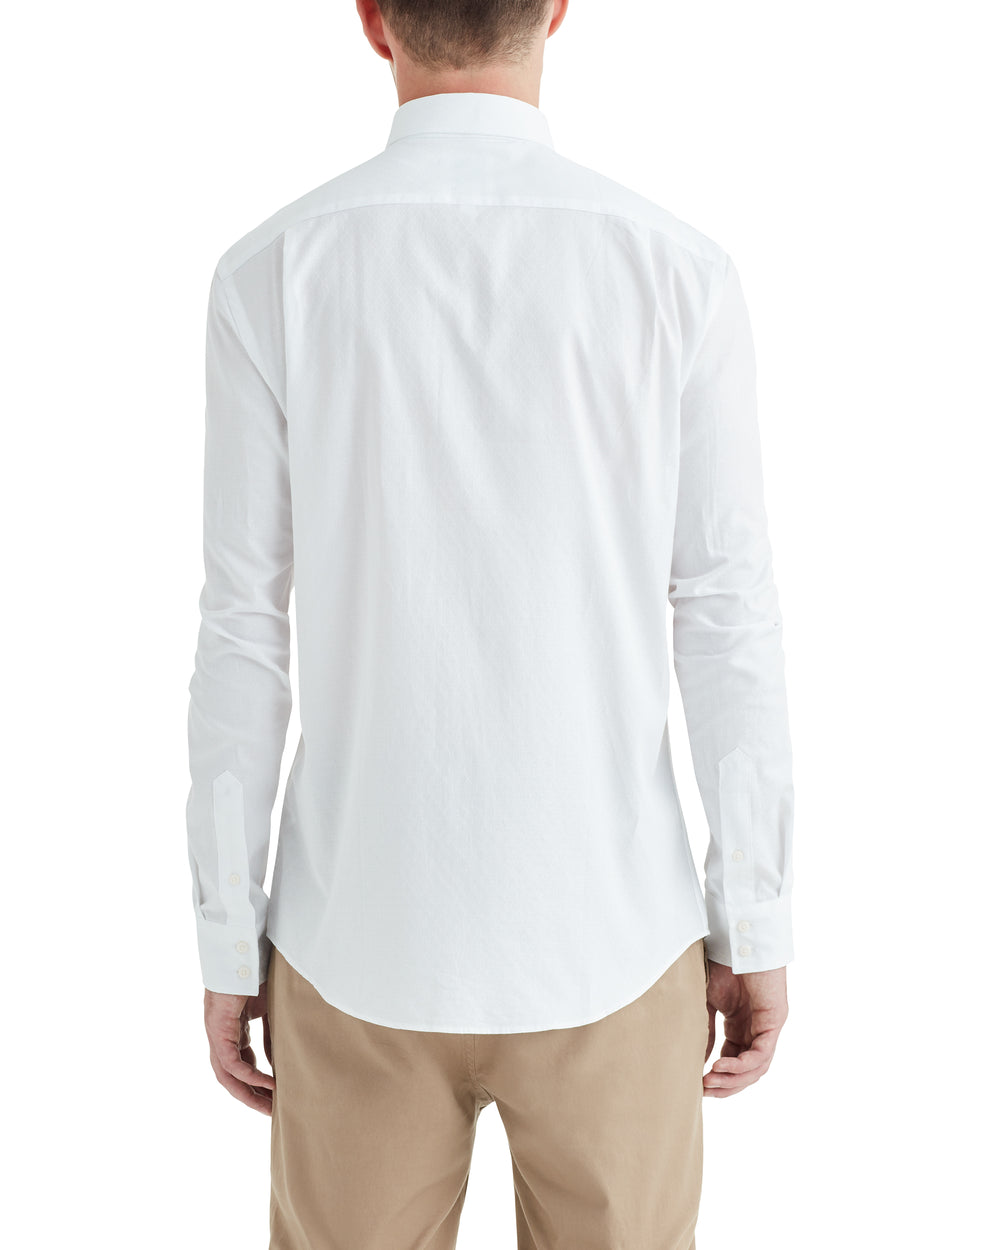 White on White Jacquard Slim Fit Dress Shirt